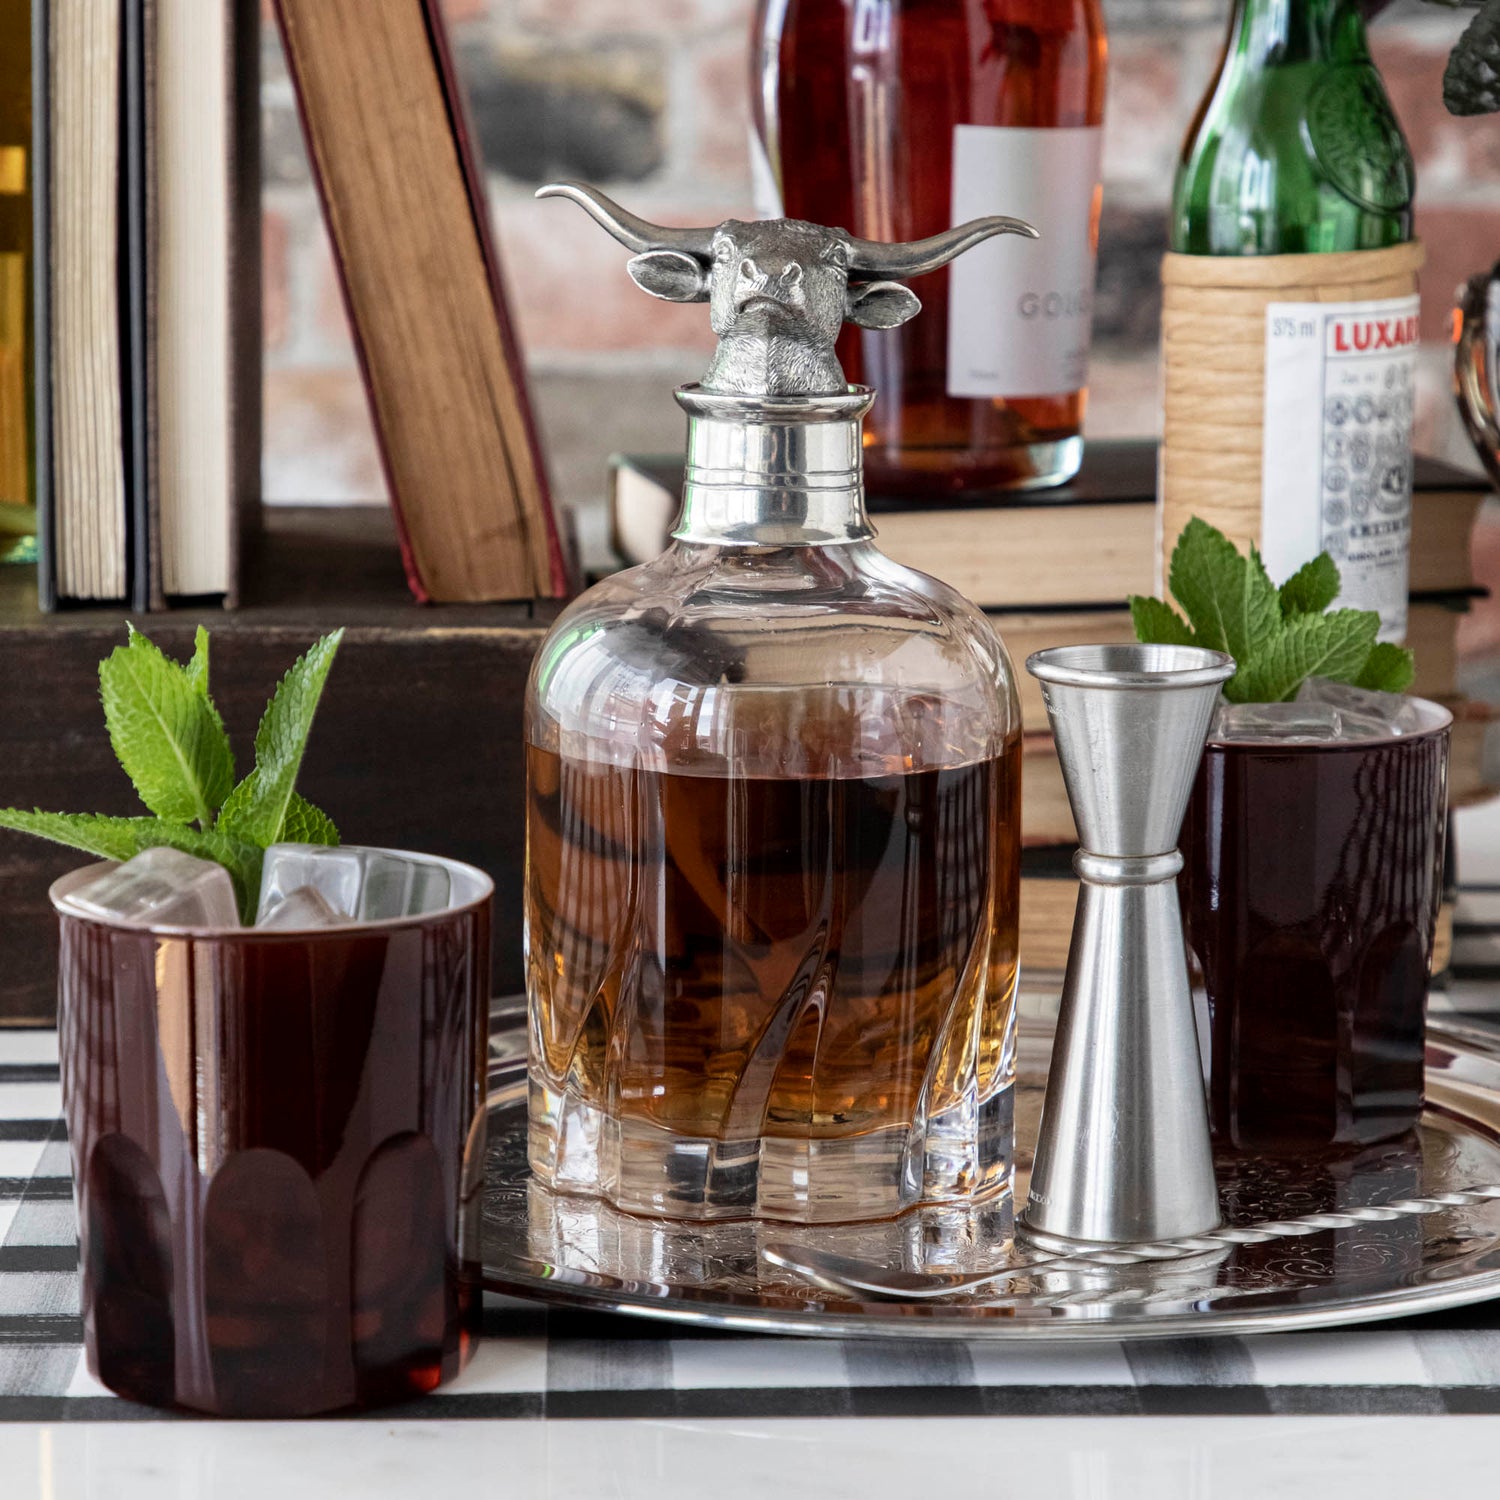 Shade Whiskey Carafe, whisky bottle and glass